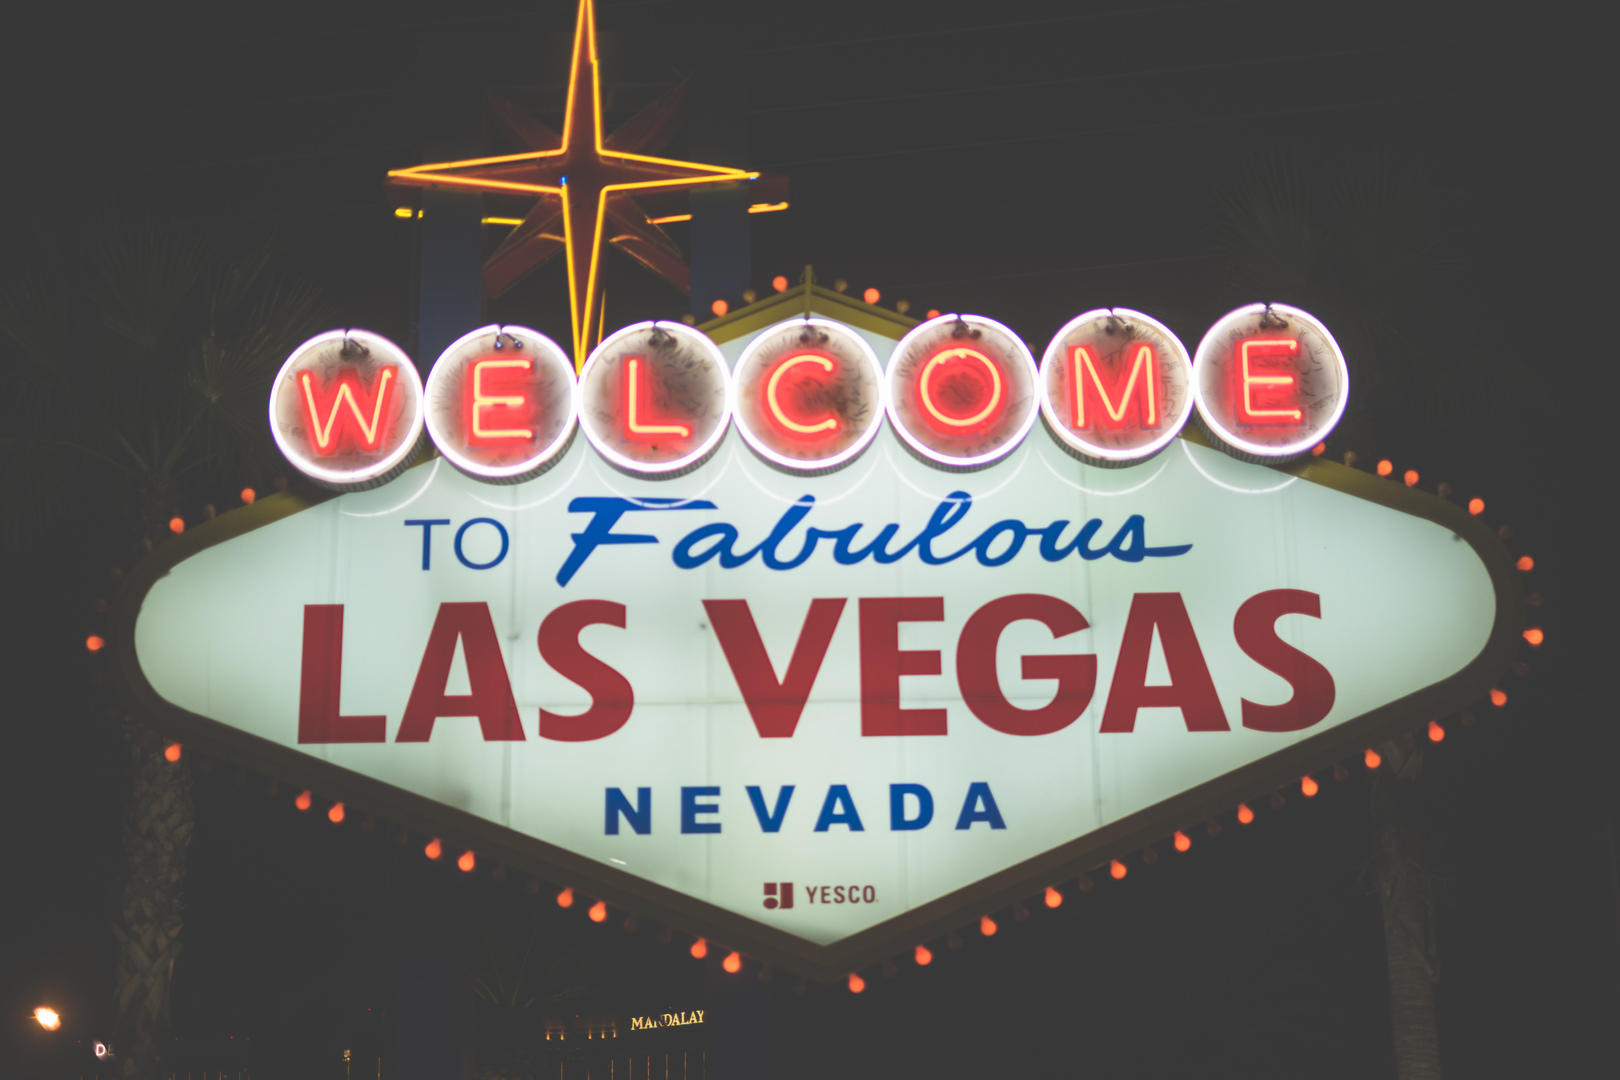 The Best Black Friday Hotel Deals in Las Vegas